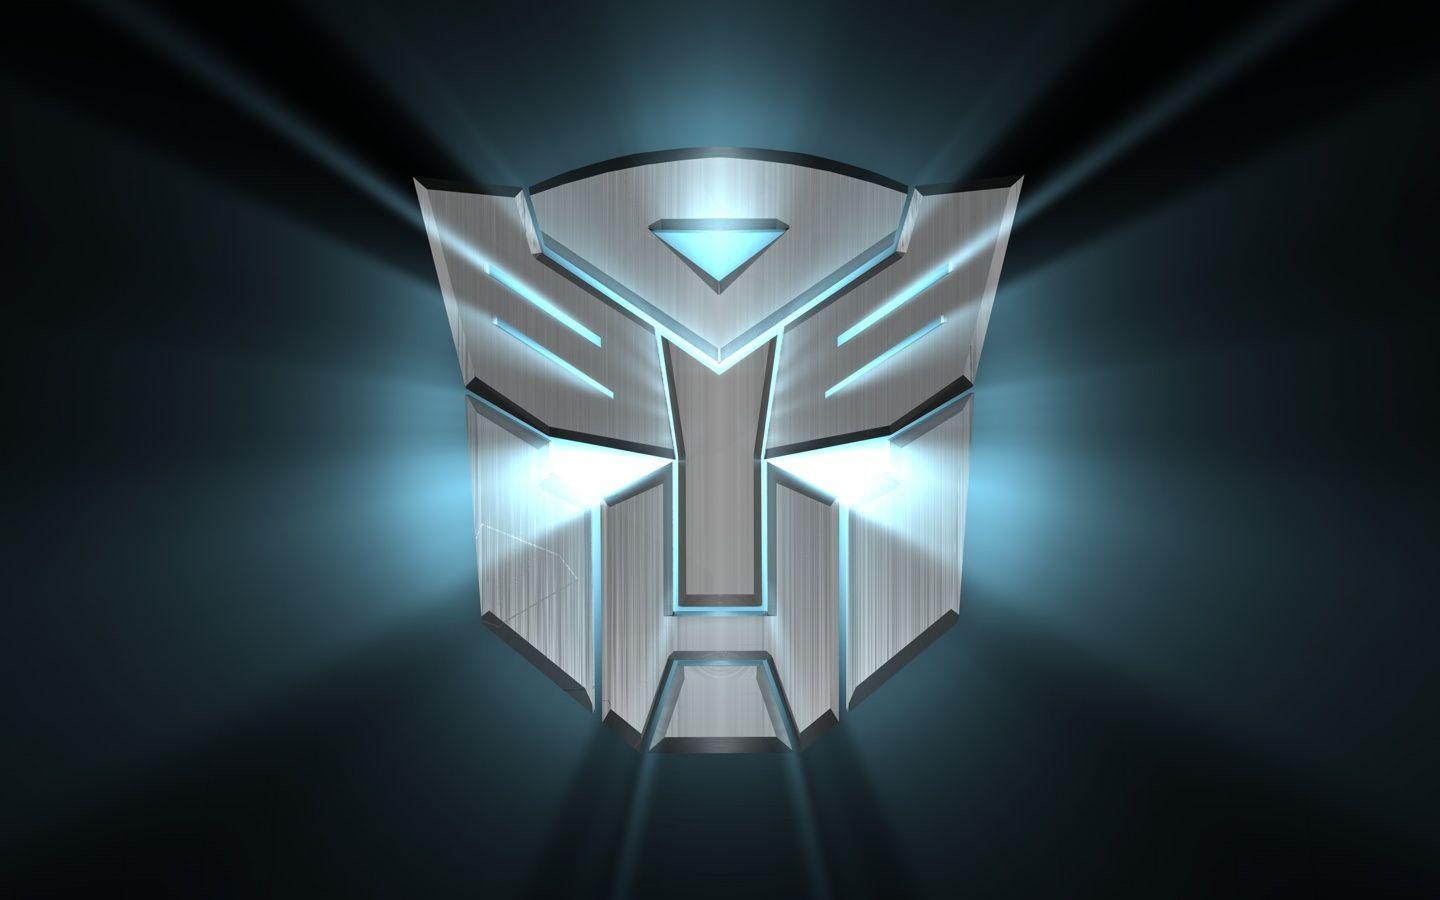 Cool Autobot Logo - Autobot logo Wallpaper and Background Image | 1440x900 | ID:96550 ...